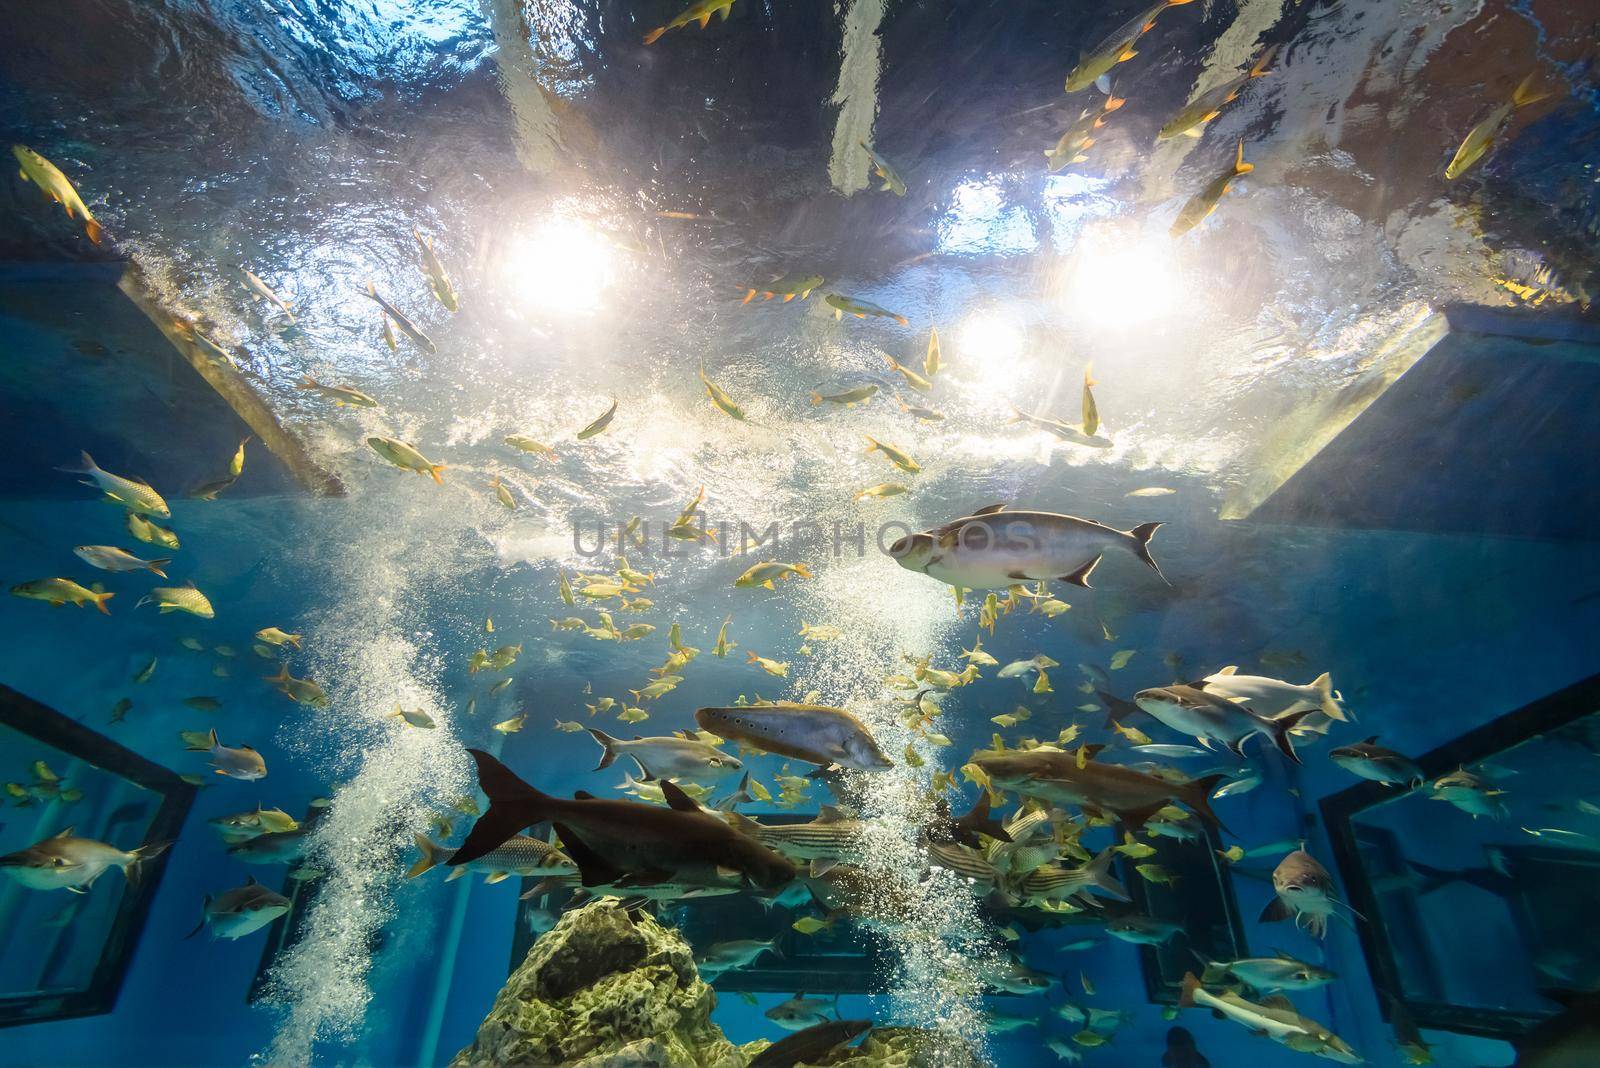 Aquarium of freshwater fish by Yongkiet